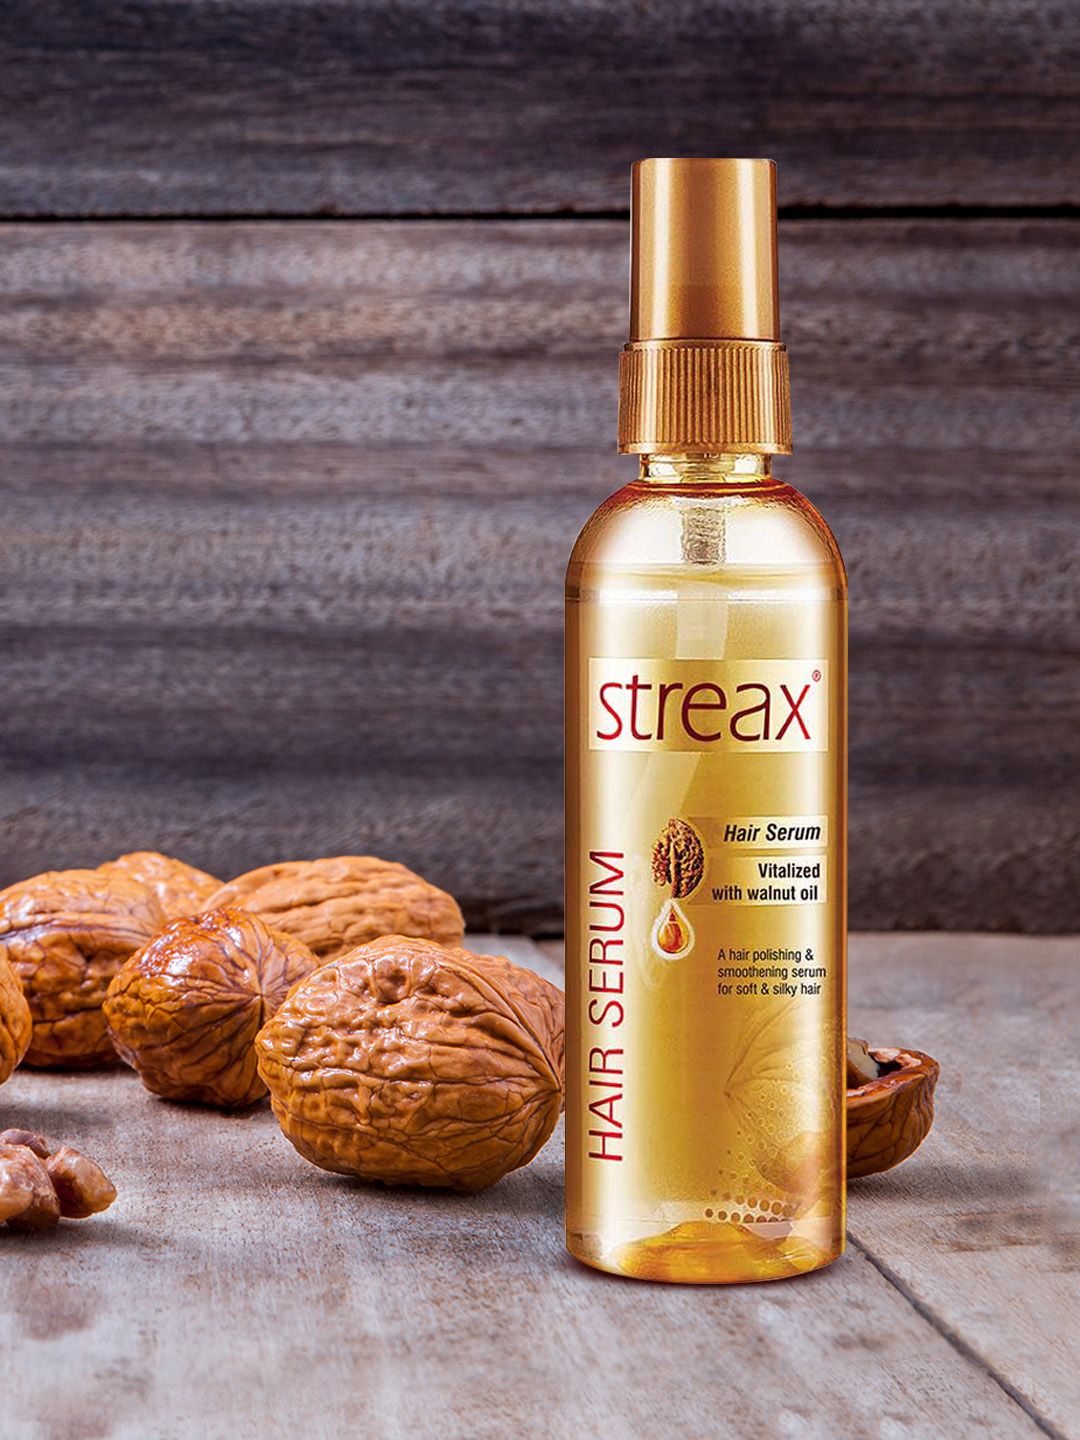 Streax Vitalised with Walnut Oil Hair Serum 45ml Price in India